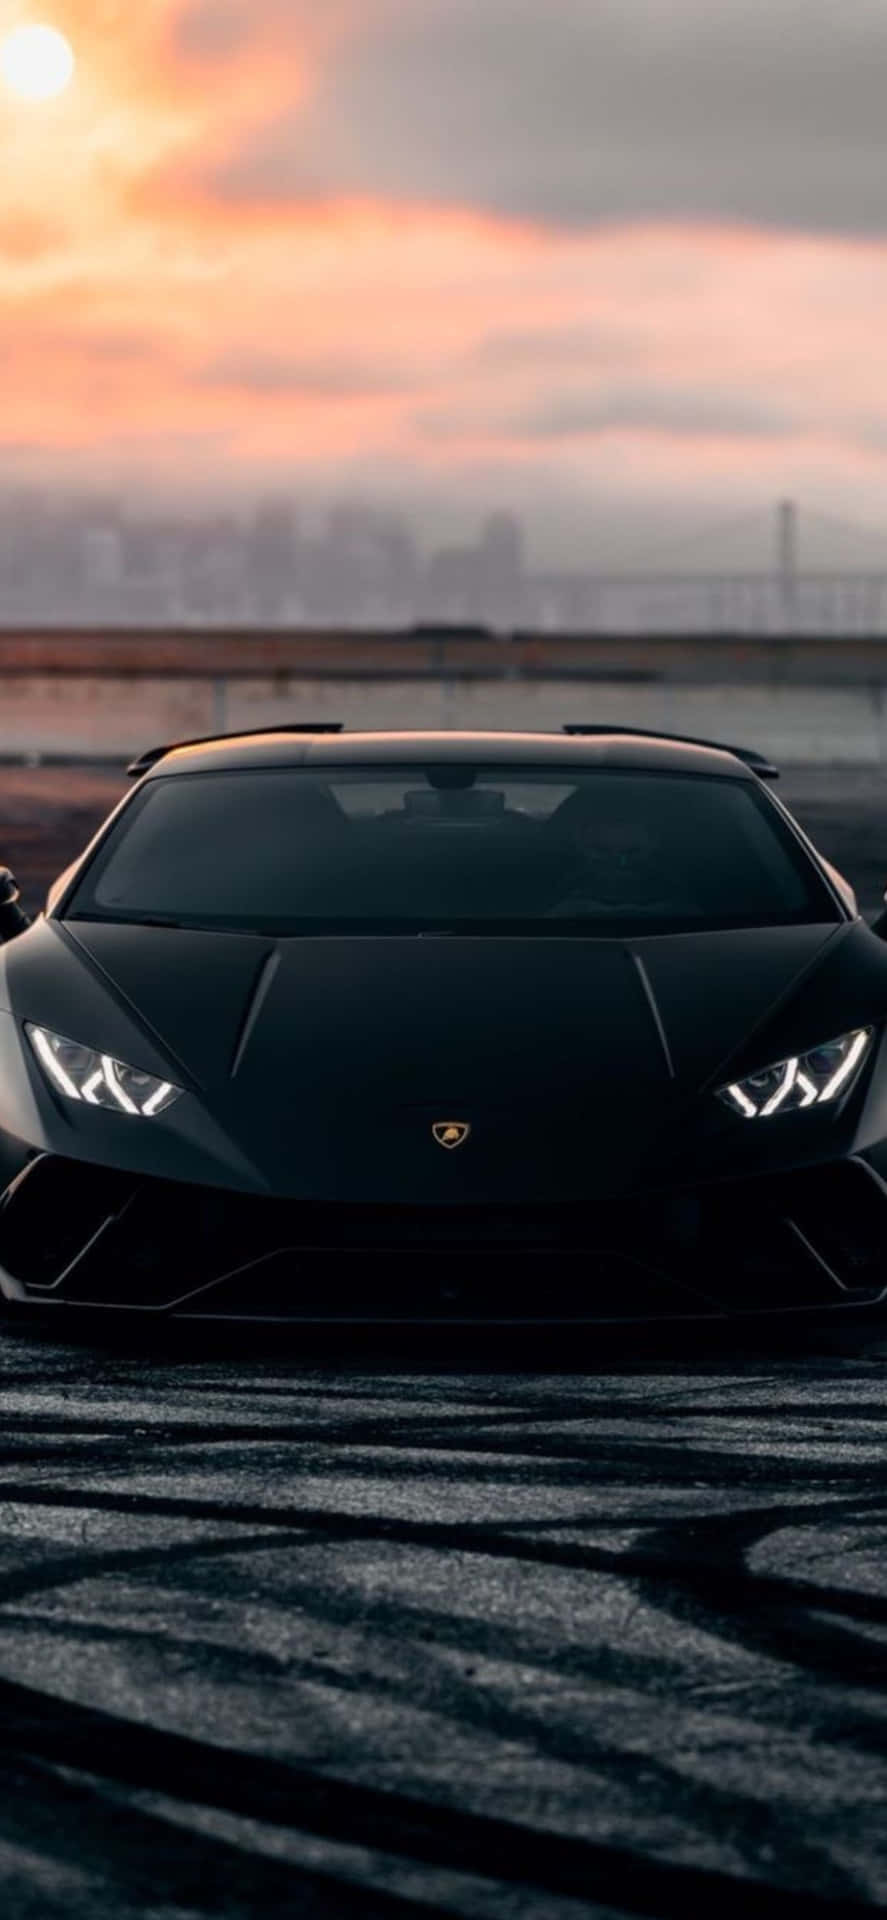 Iphonexs Max Lamborghini Black Huracan Bakgrundsbild